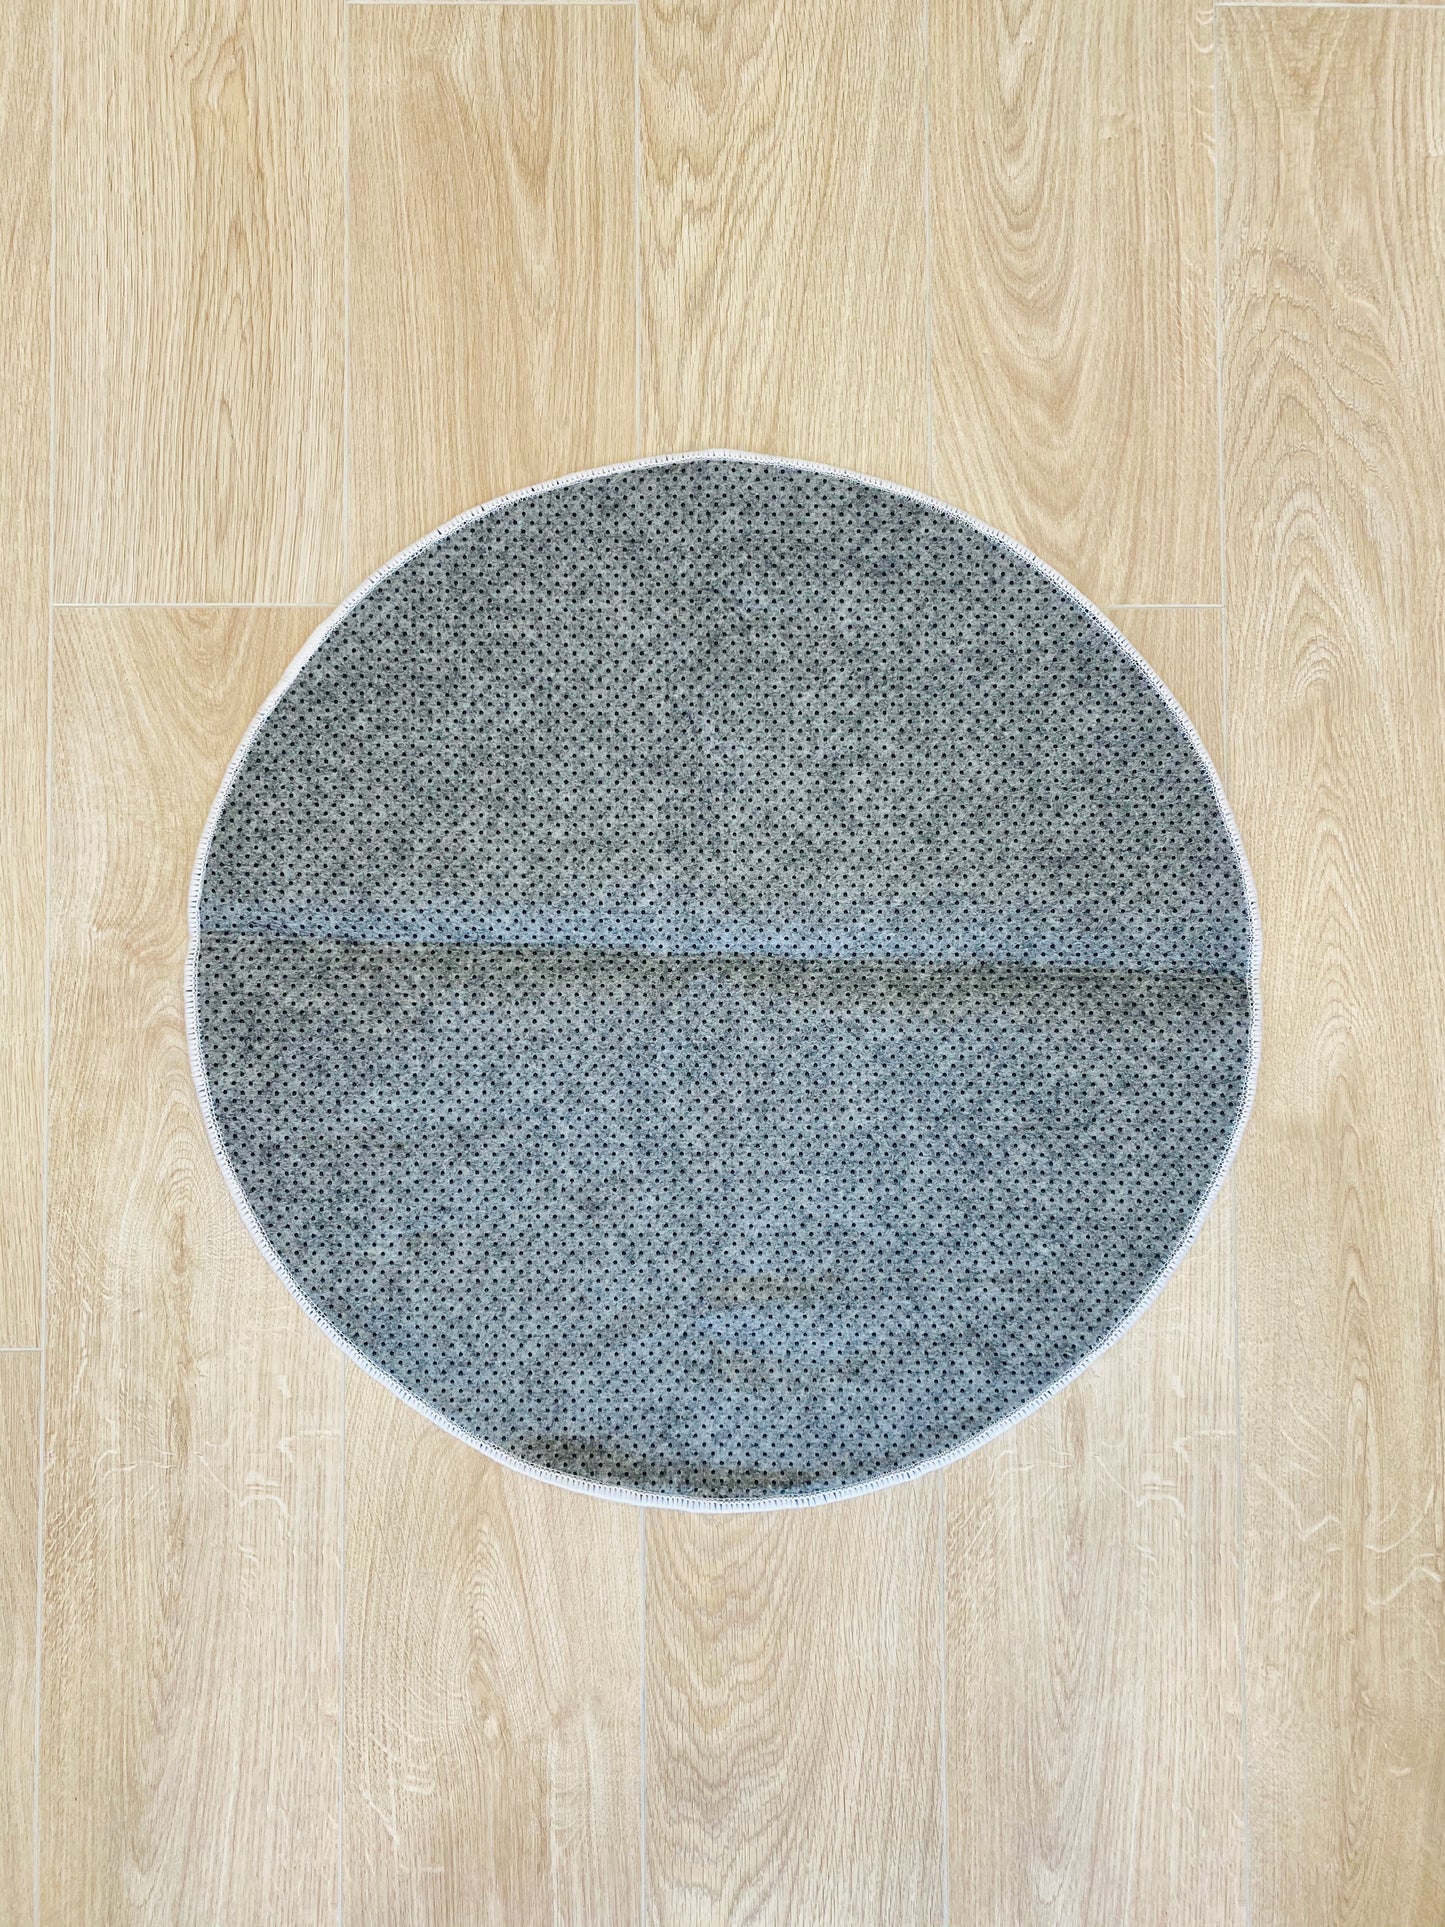 James Harden NBA Player Wool Thread Modern Accent Premium Area Living Room Carpet